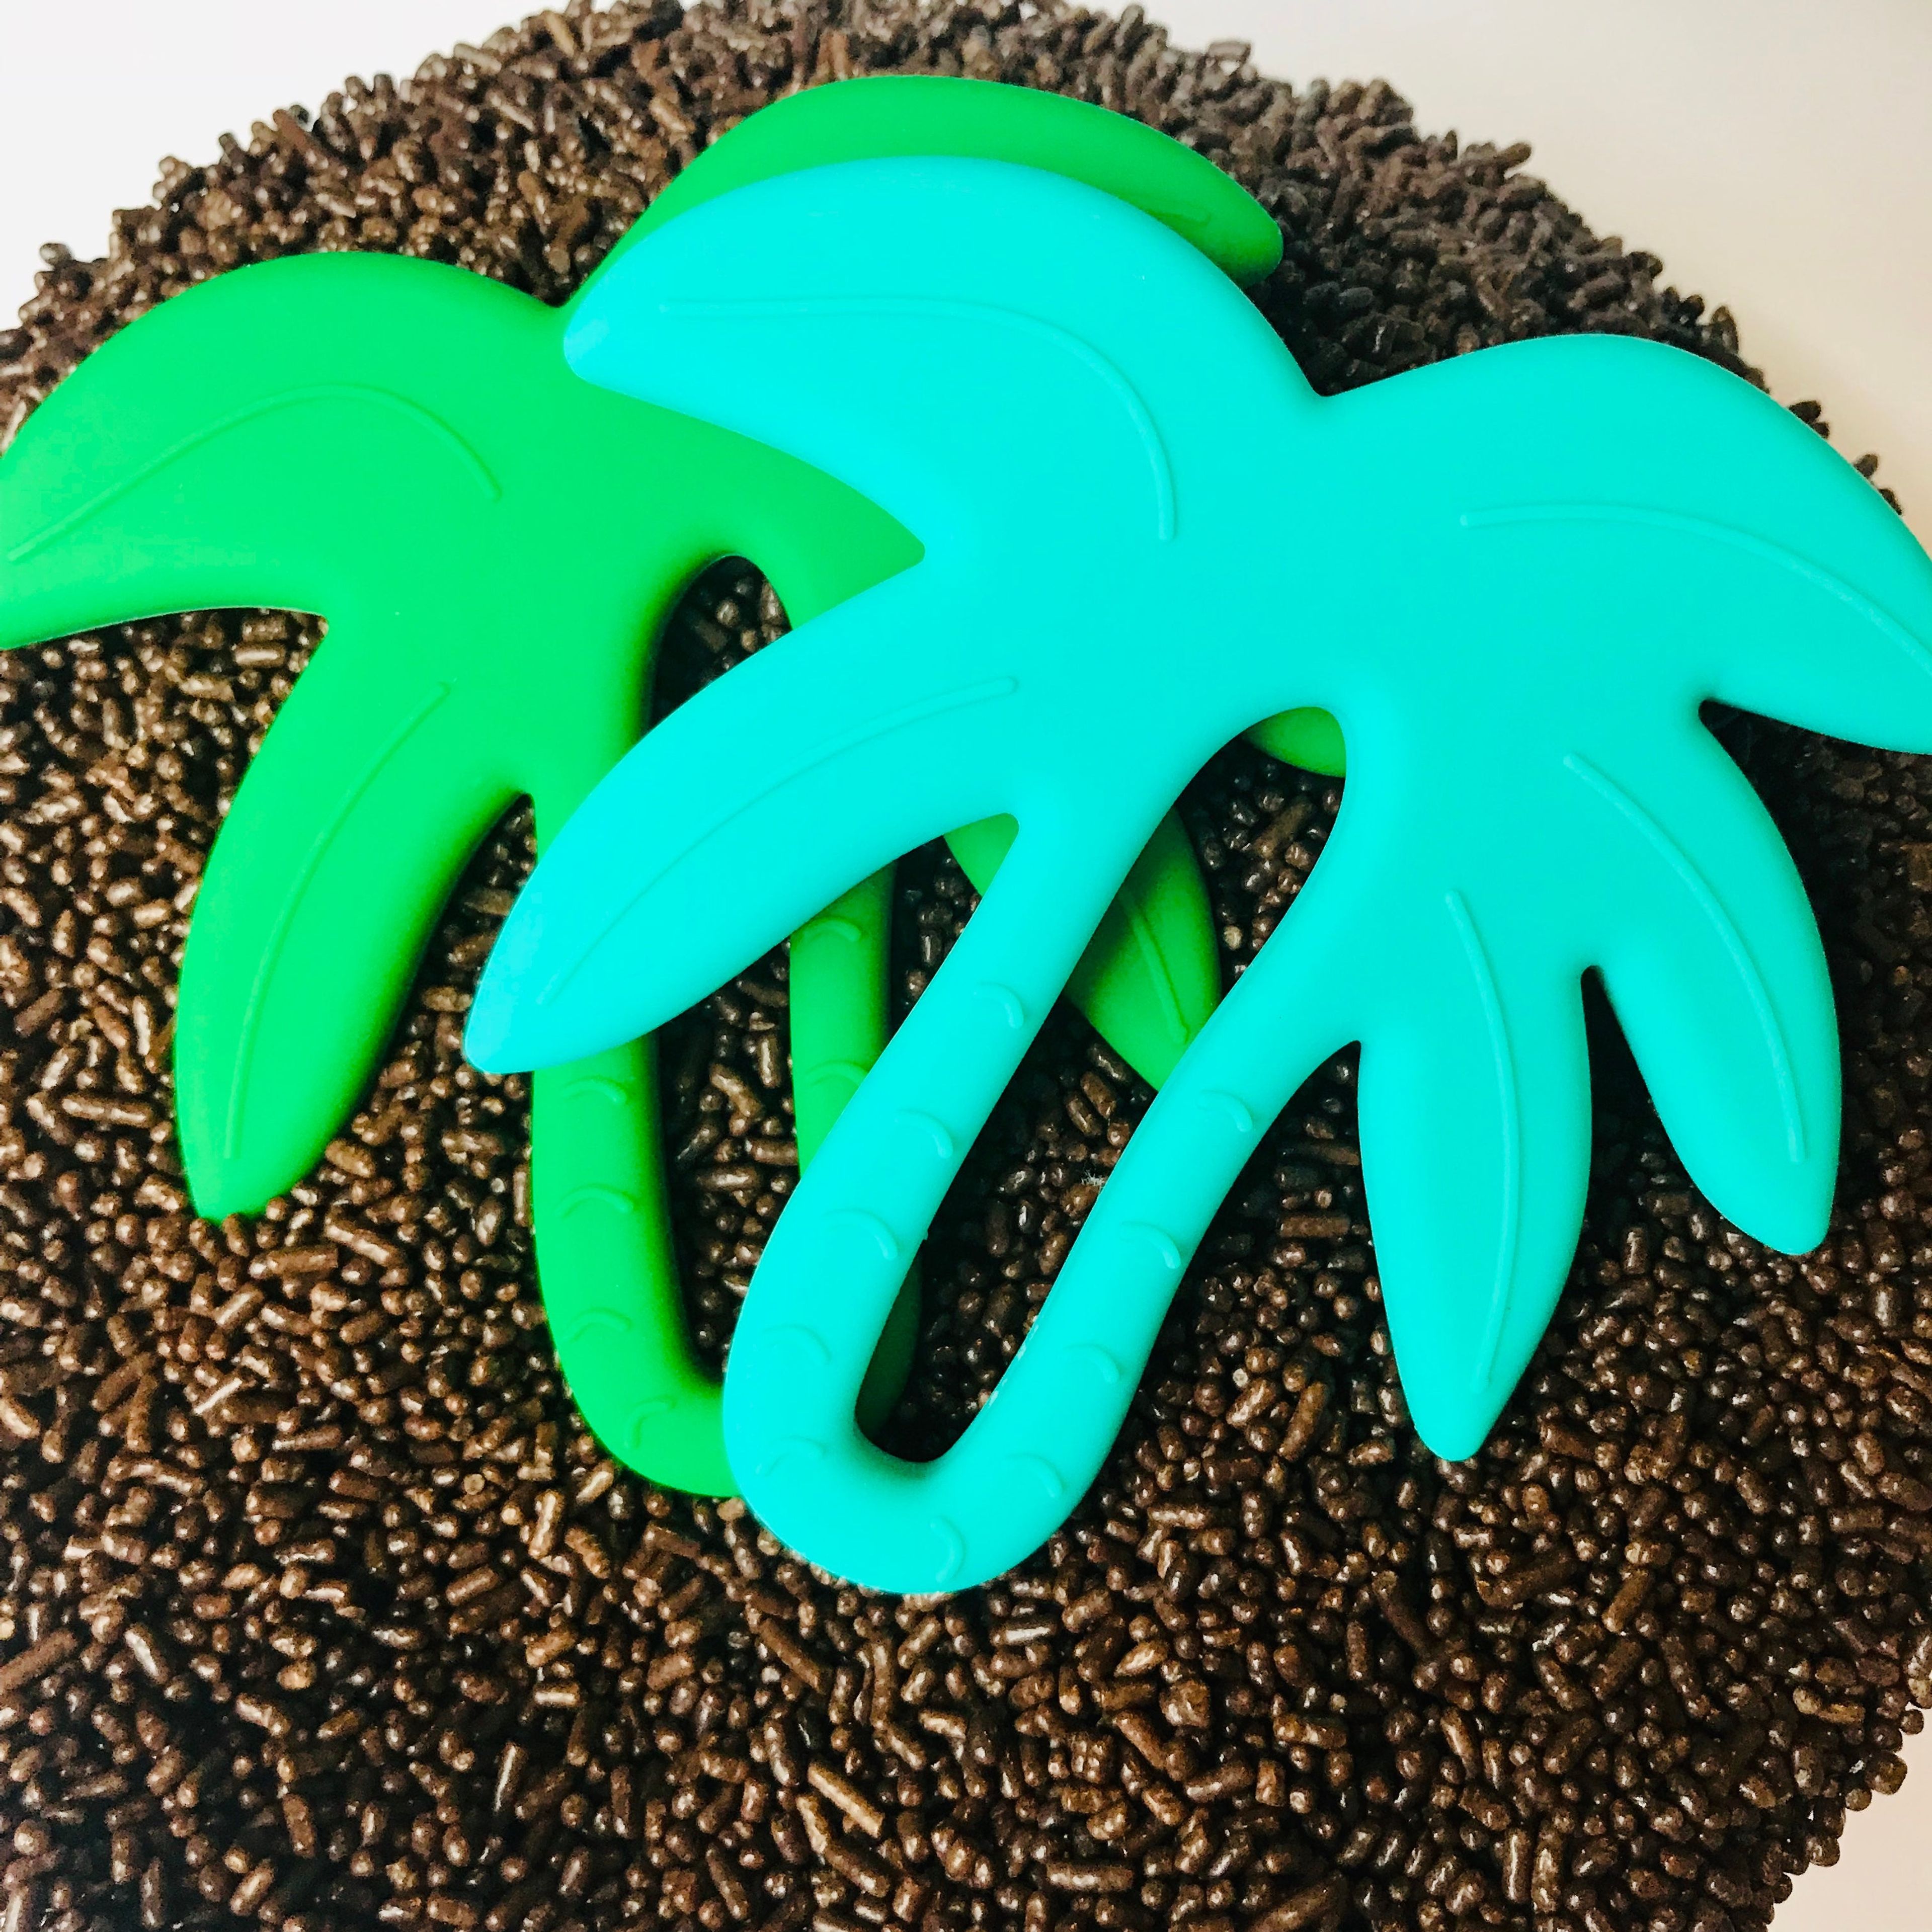 Palm Tree Teething Toy